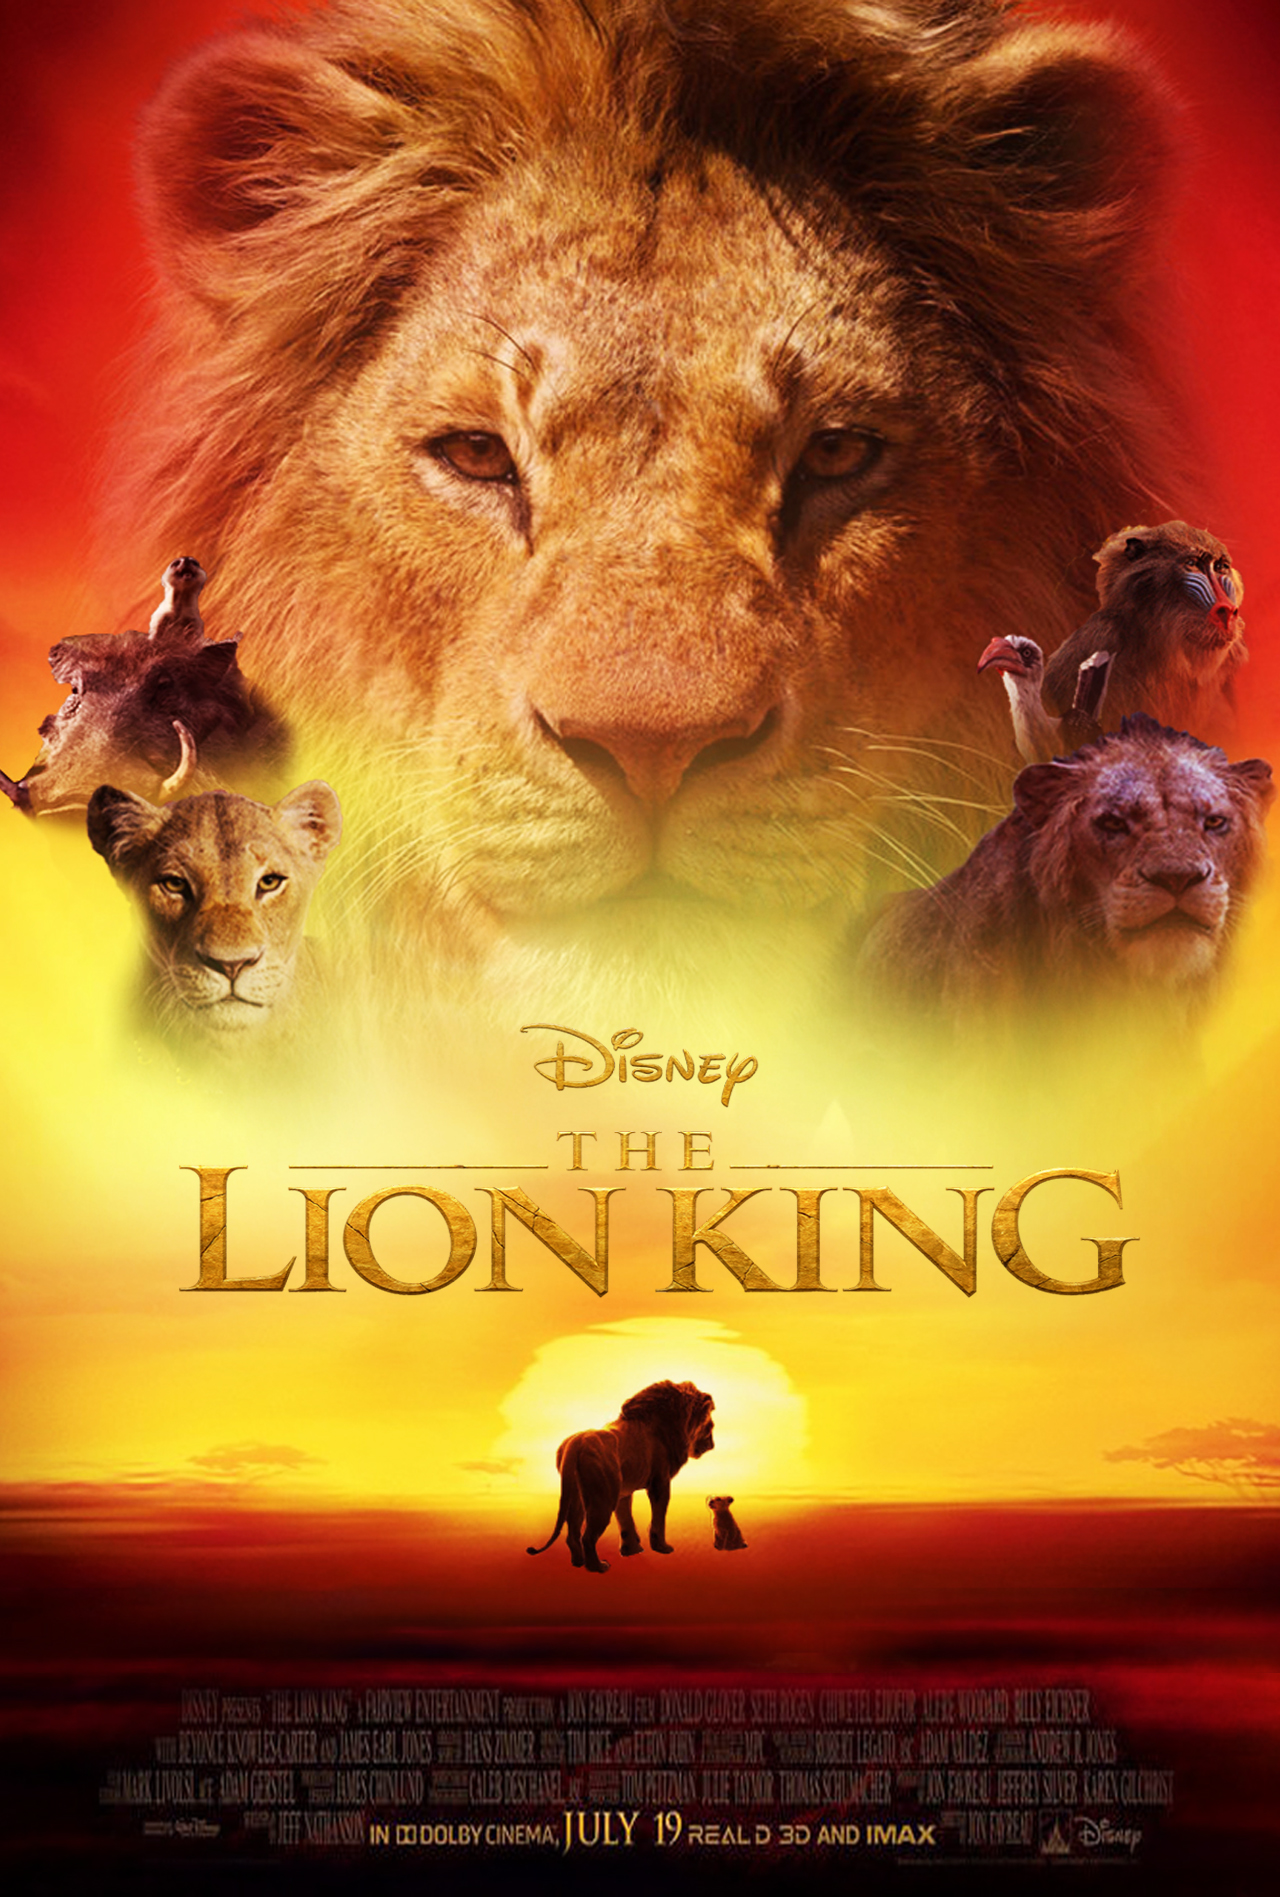 Half Term Movie: The Lion King (PG, 2019)